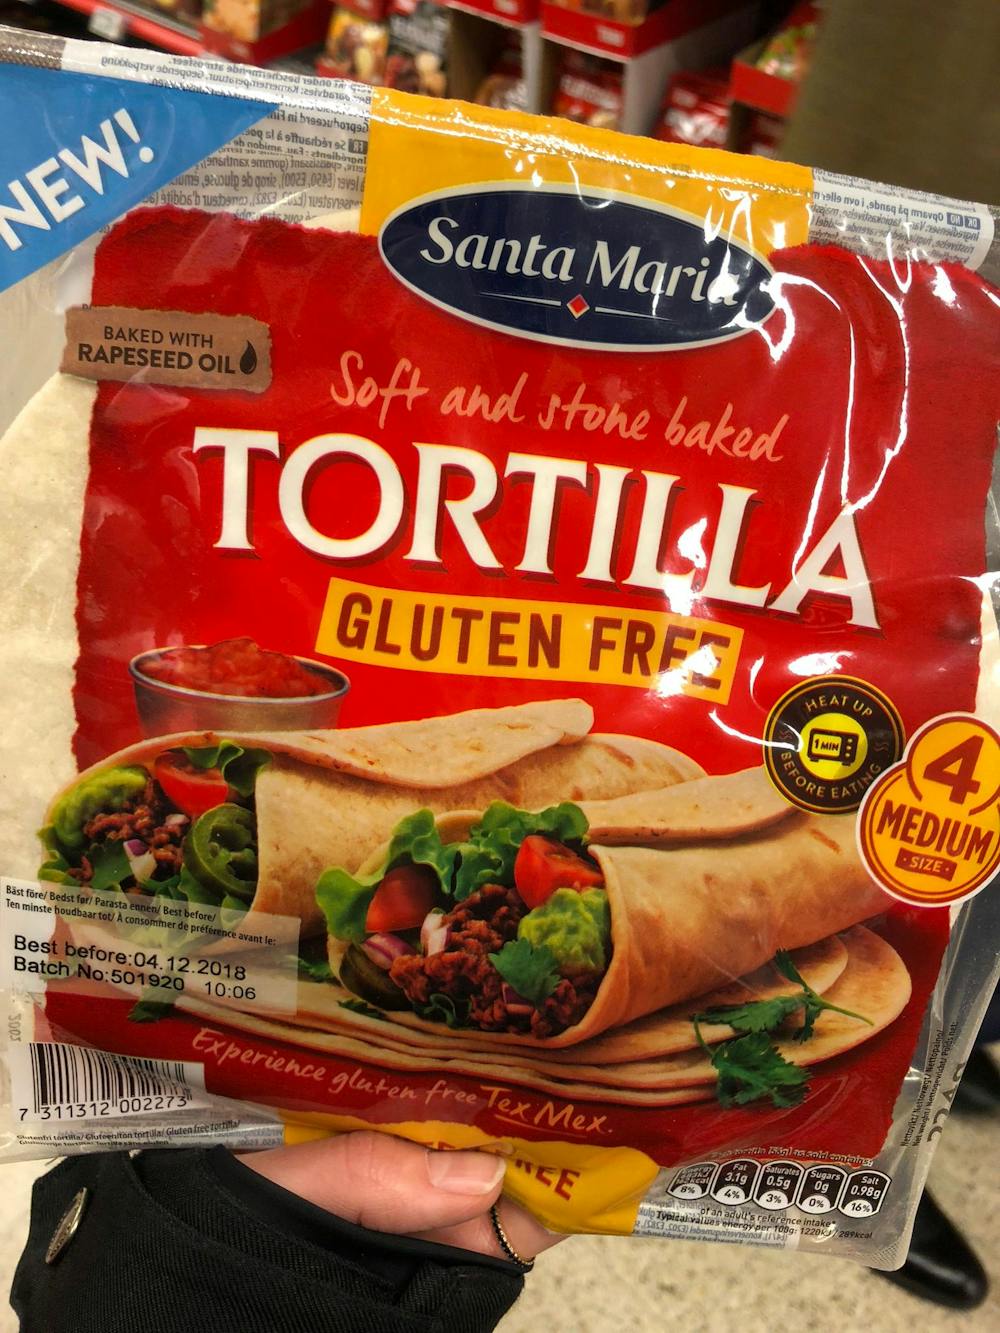 Tortilla gluten free, Santa maria